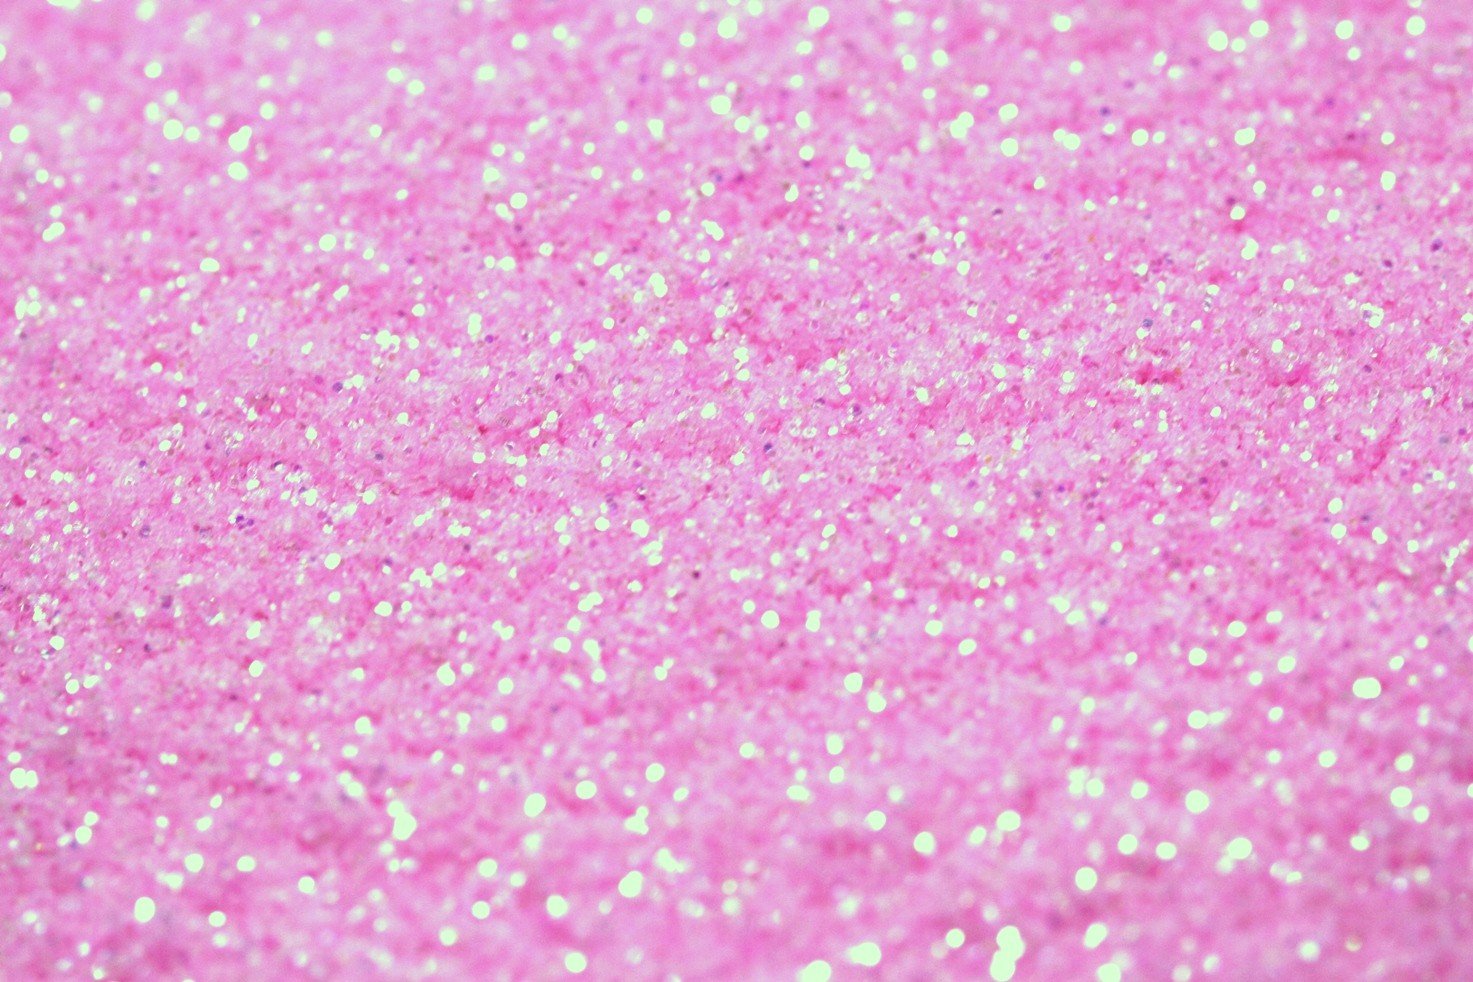  49  Pink Glitter Desktop Wallpaper on WallpaperSafari